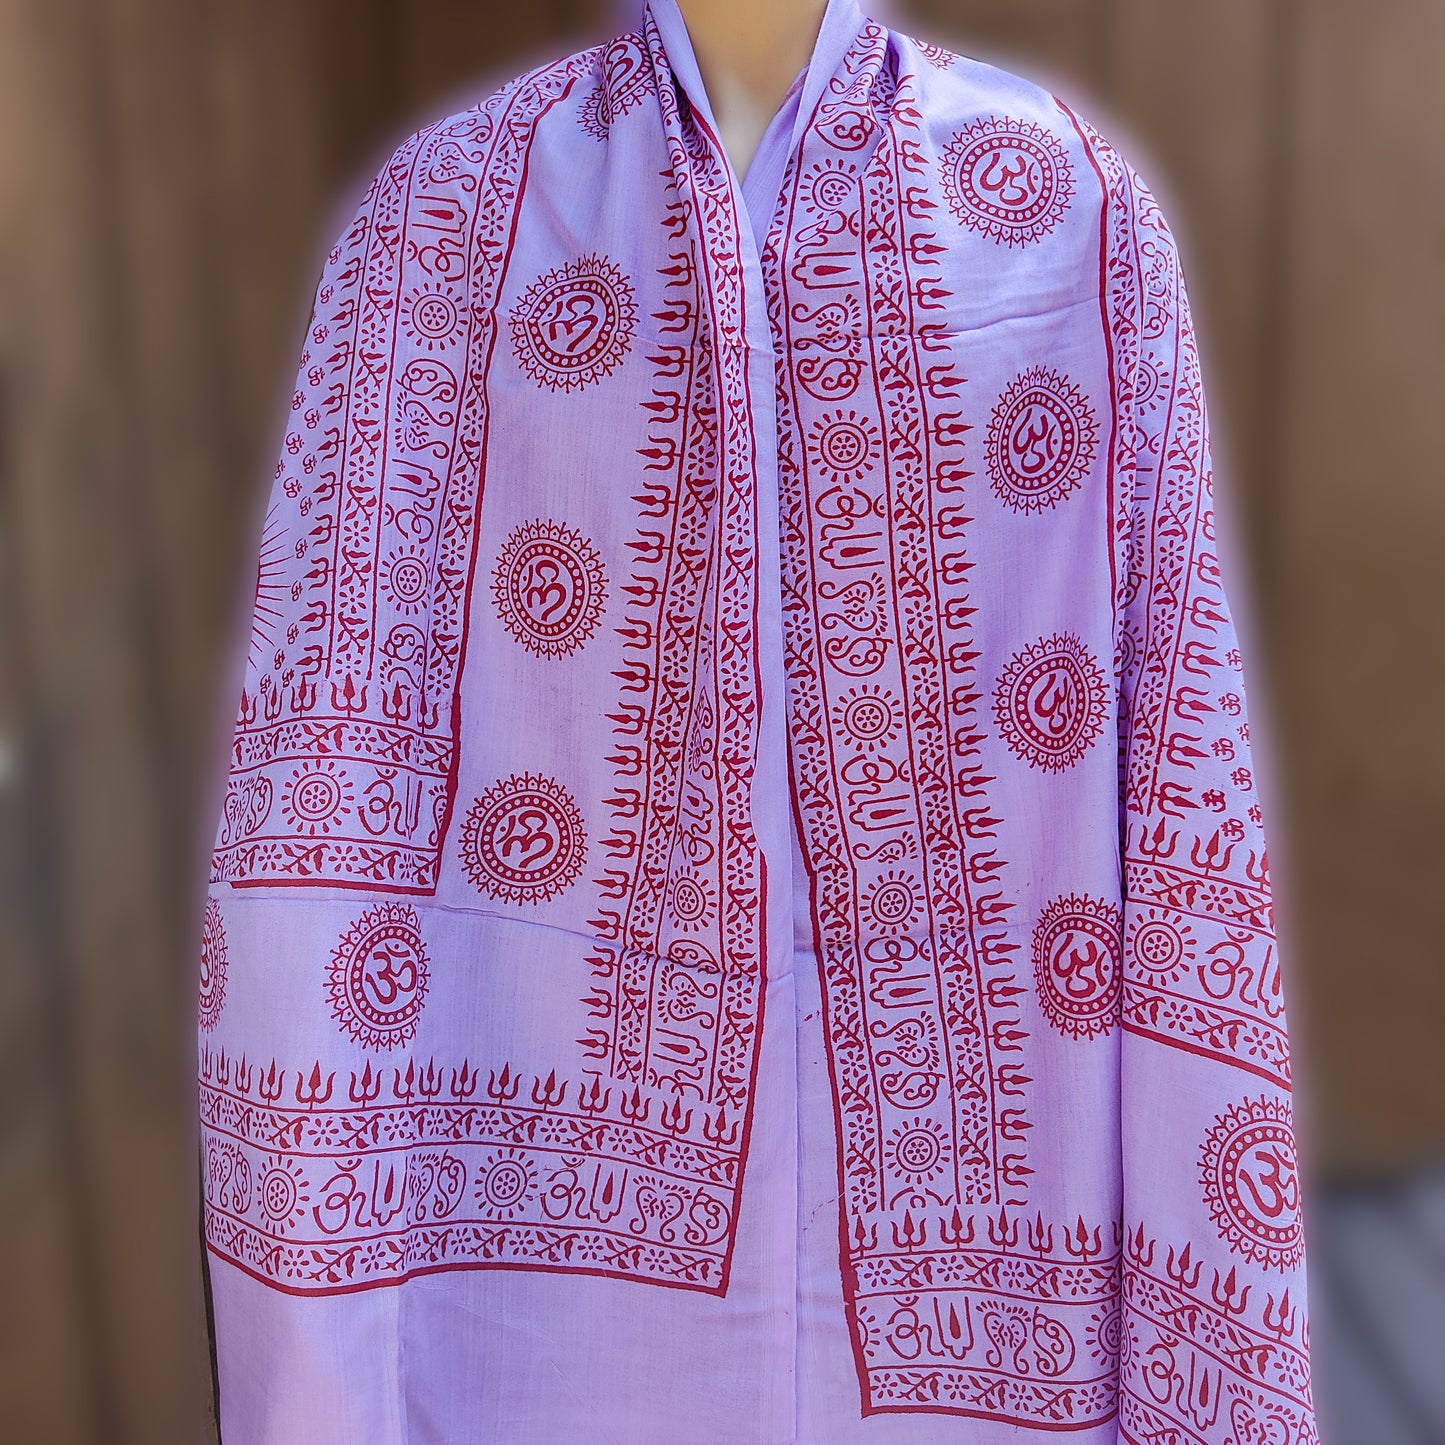 Om Purple Meditation Shawl with Amethyst Spiritual Necklace 108 Beads - Yoga Gift